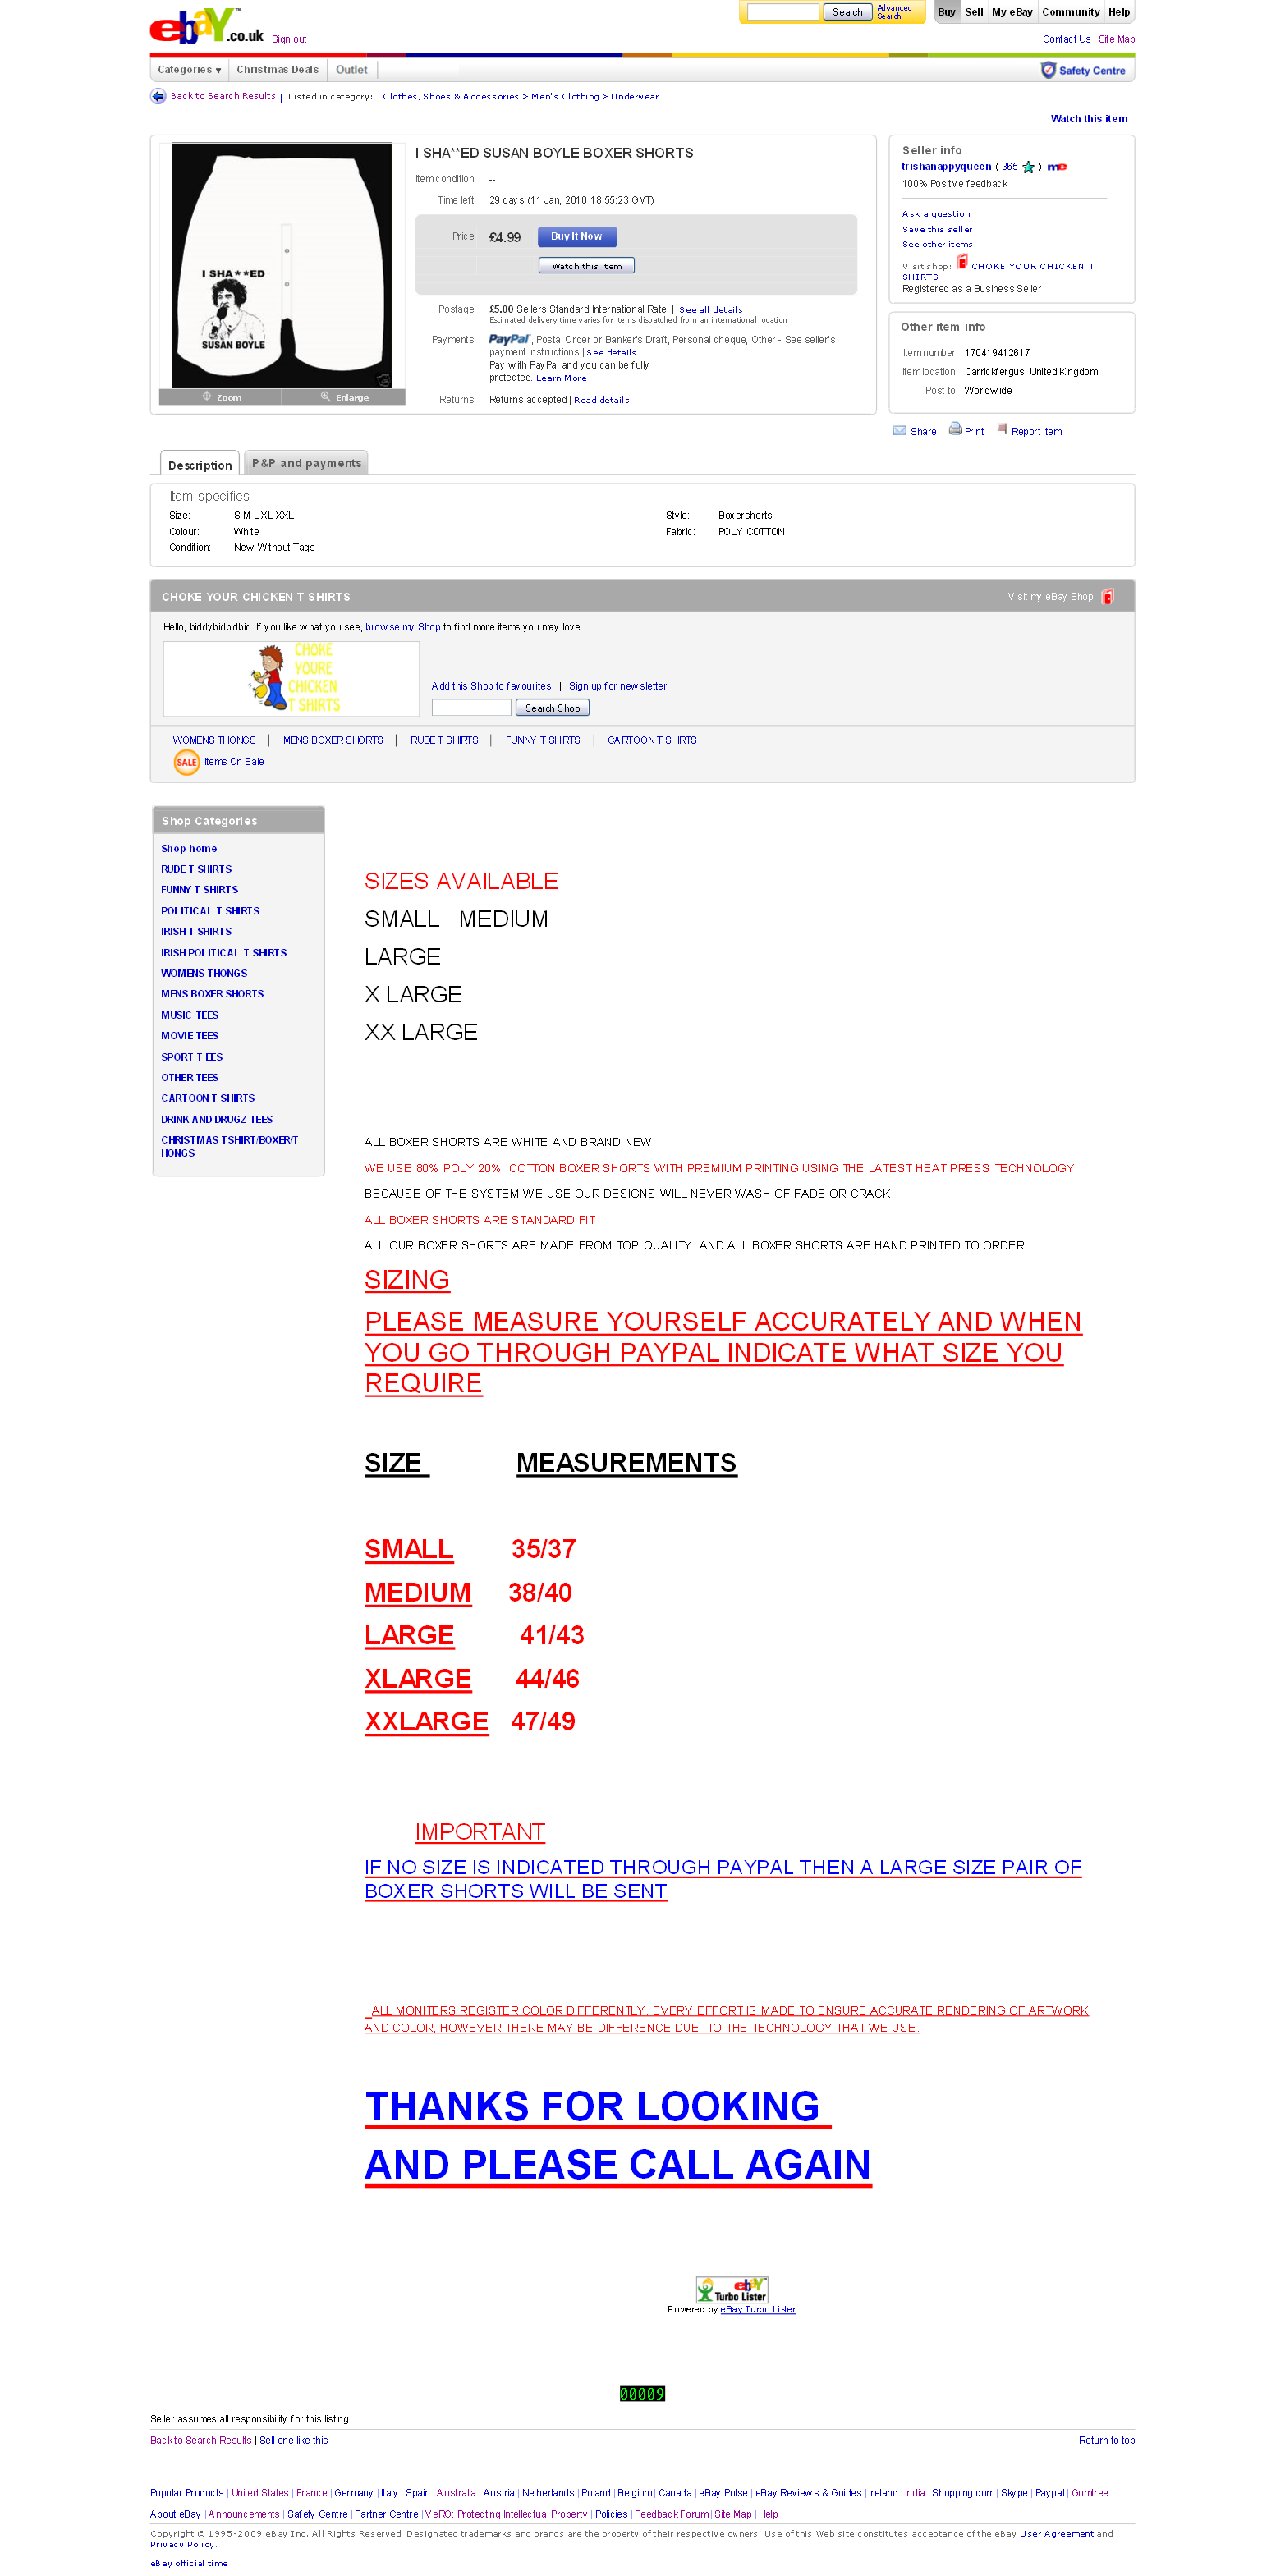 I SHAED SUSAN BOYLE BOXER SHORTS on eBay (end time 11-Jan-10 18-55-23 GMT)